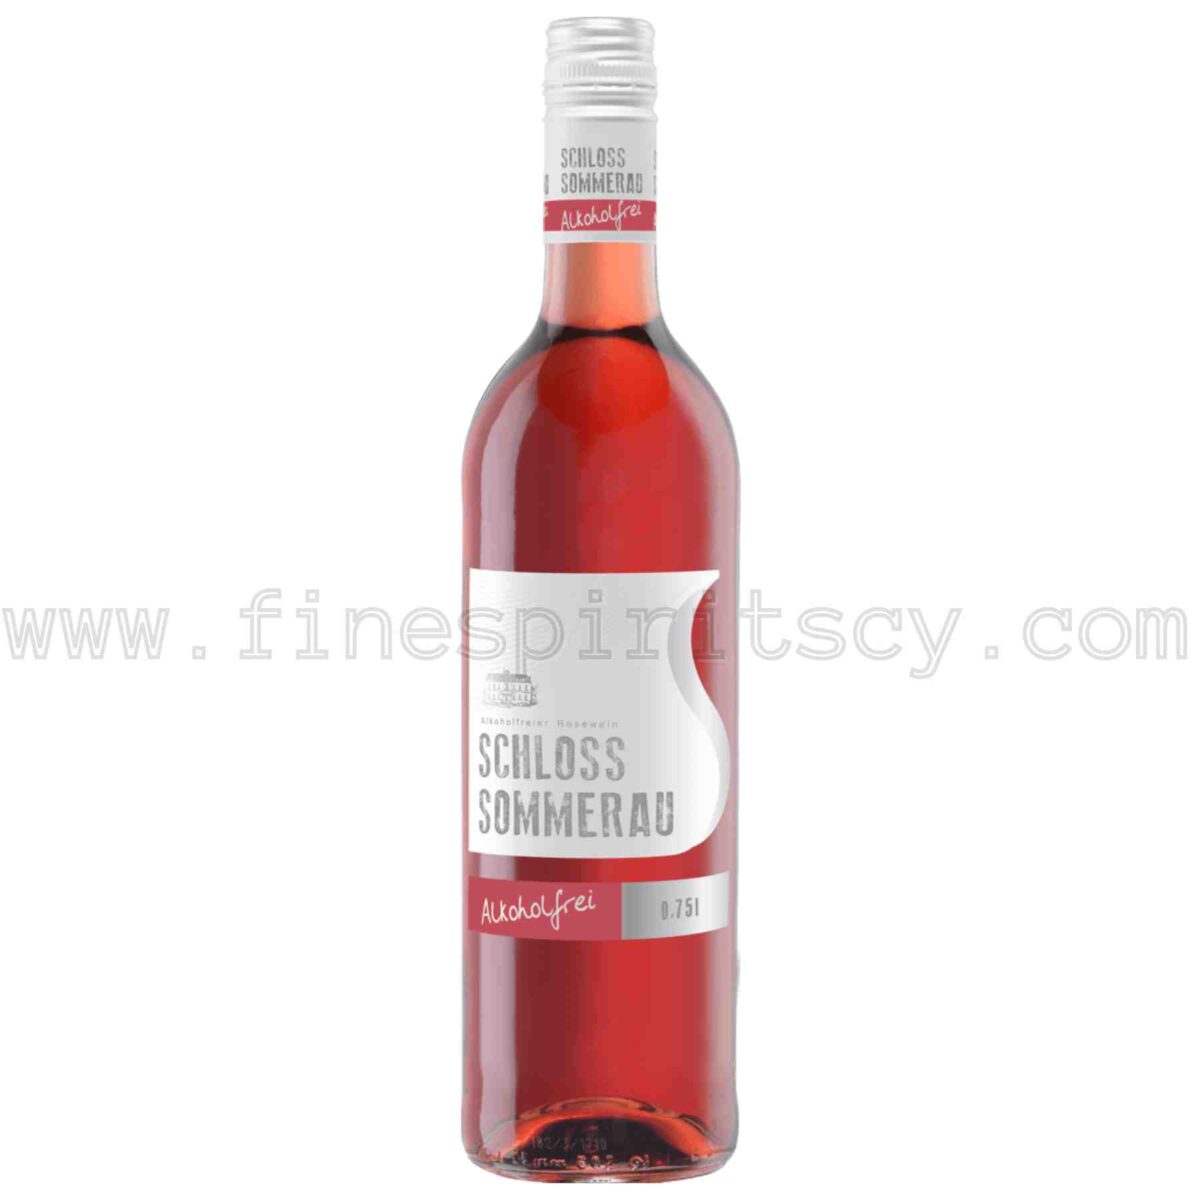 Schloss Sommerau Alkoholfrei Alcohol Free Rose Wine 750ml 75cl 0.75L